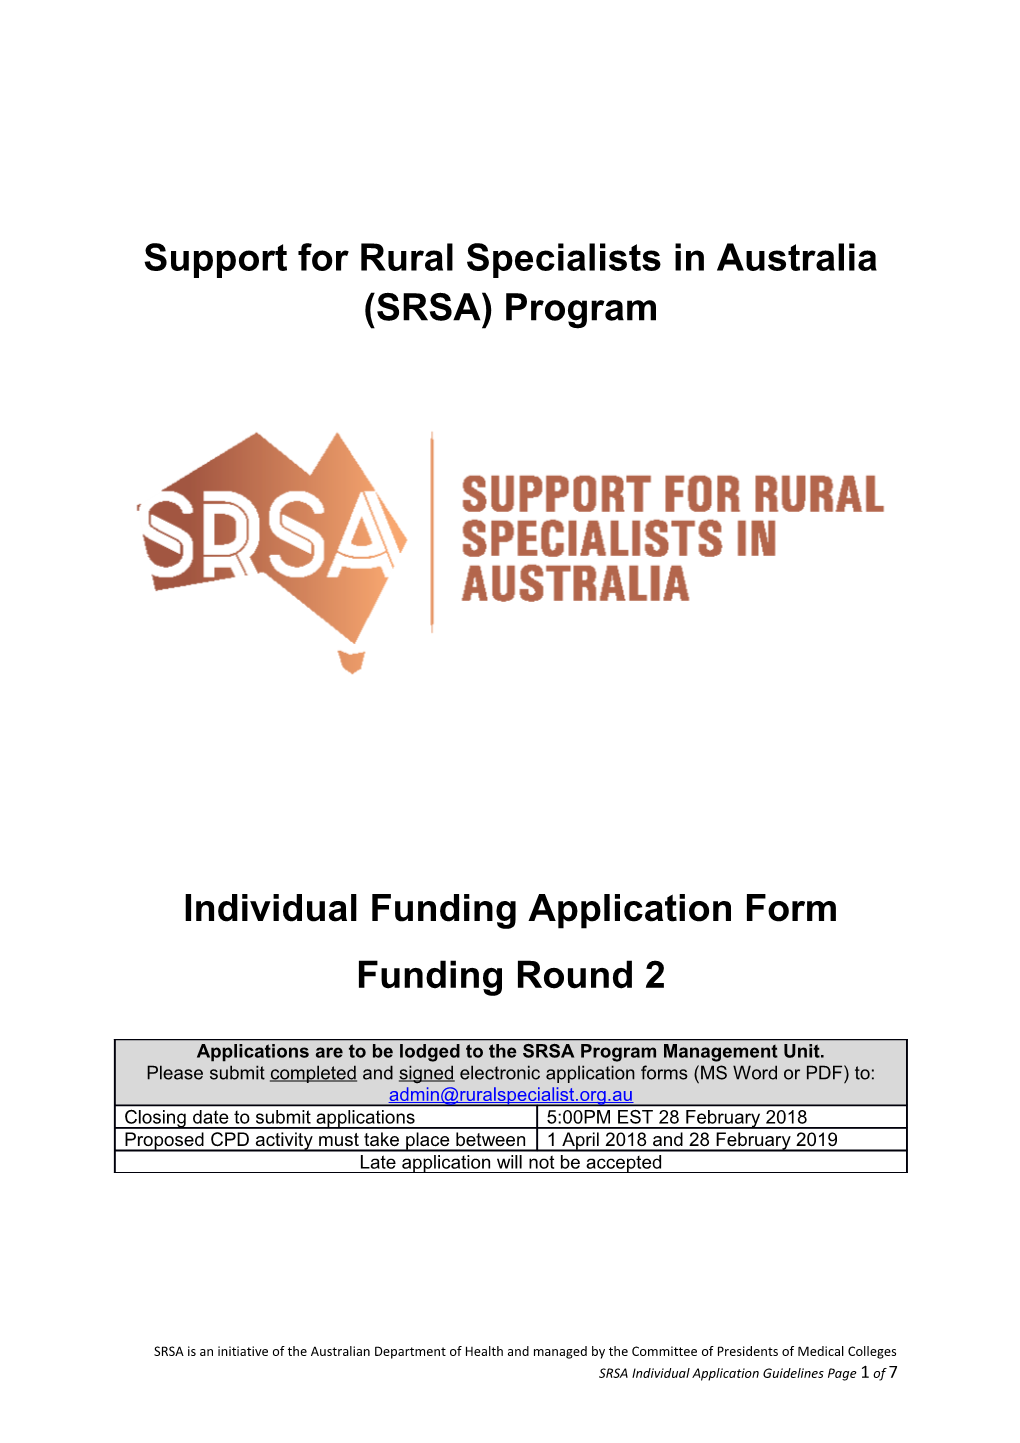 Support for Rural Specialists in Australia (SRSA) Program